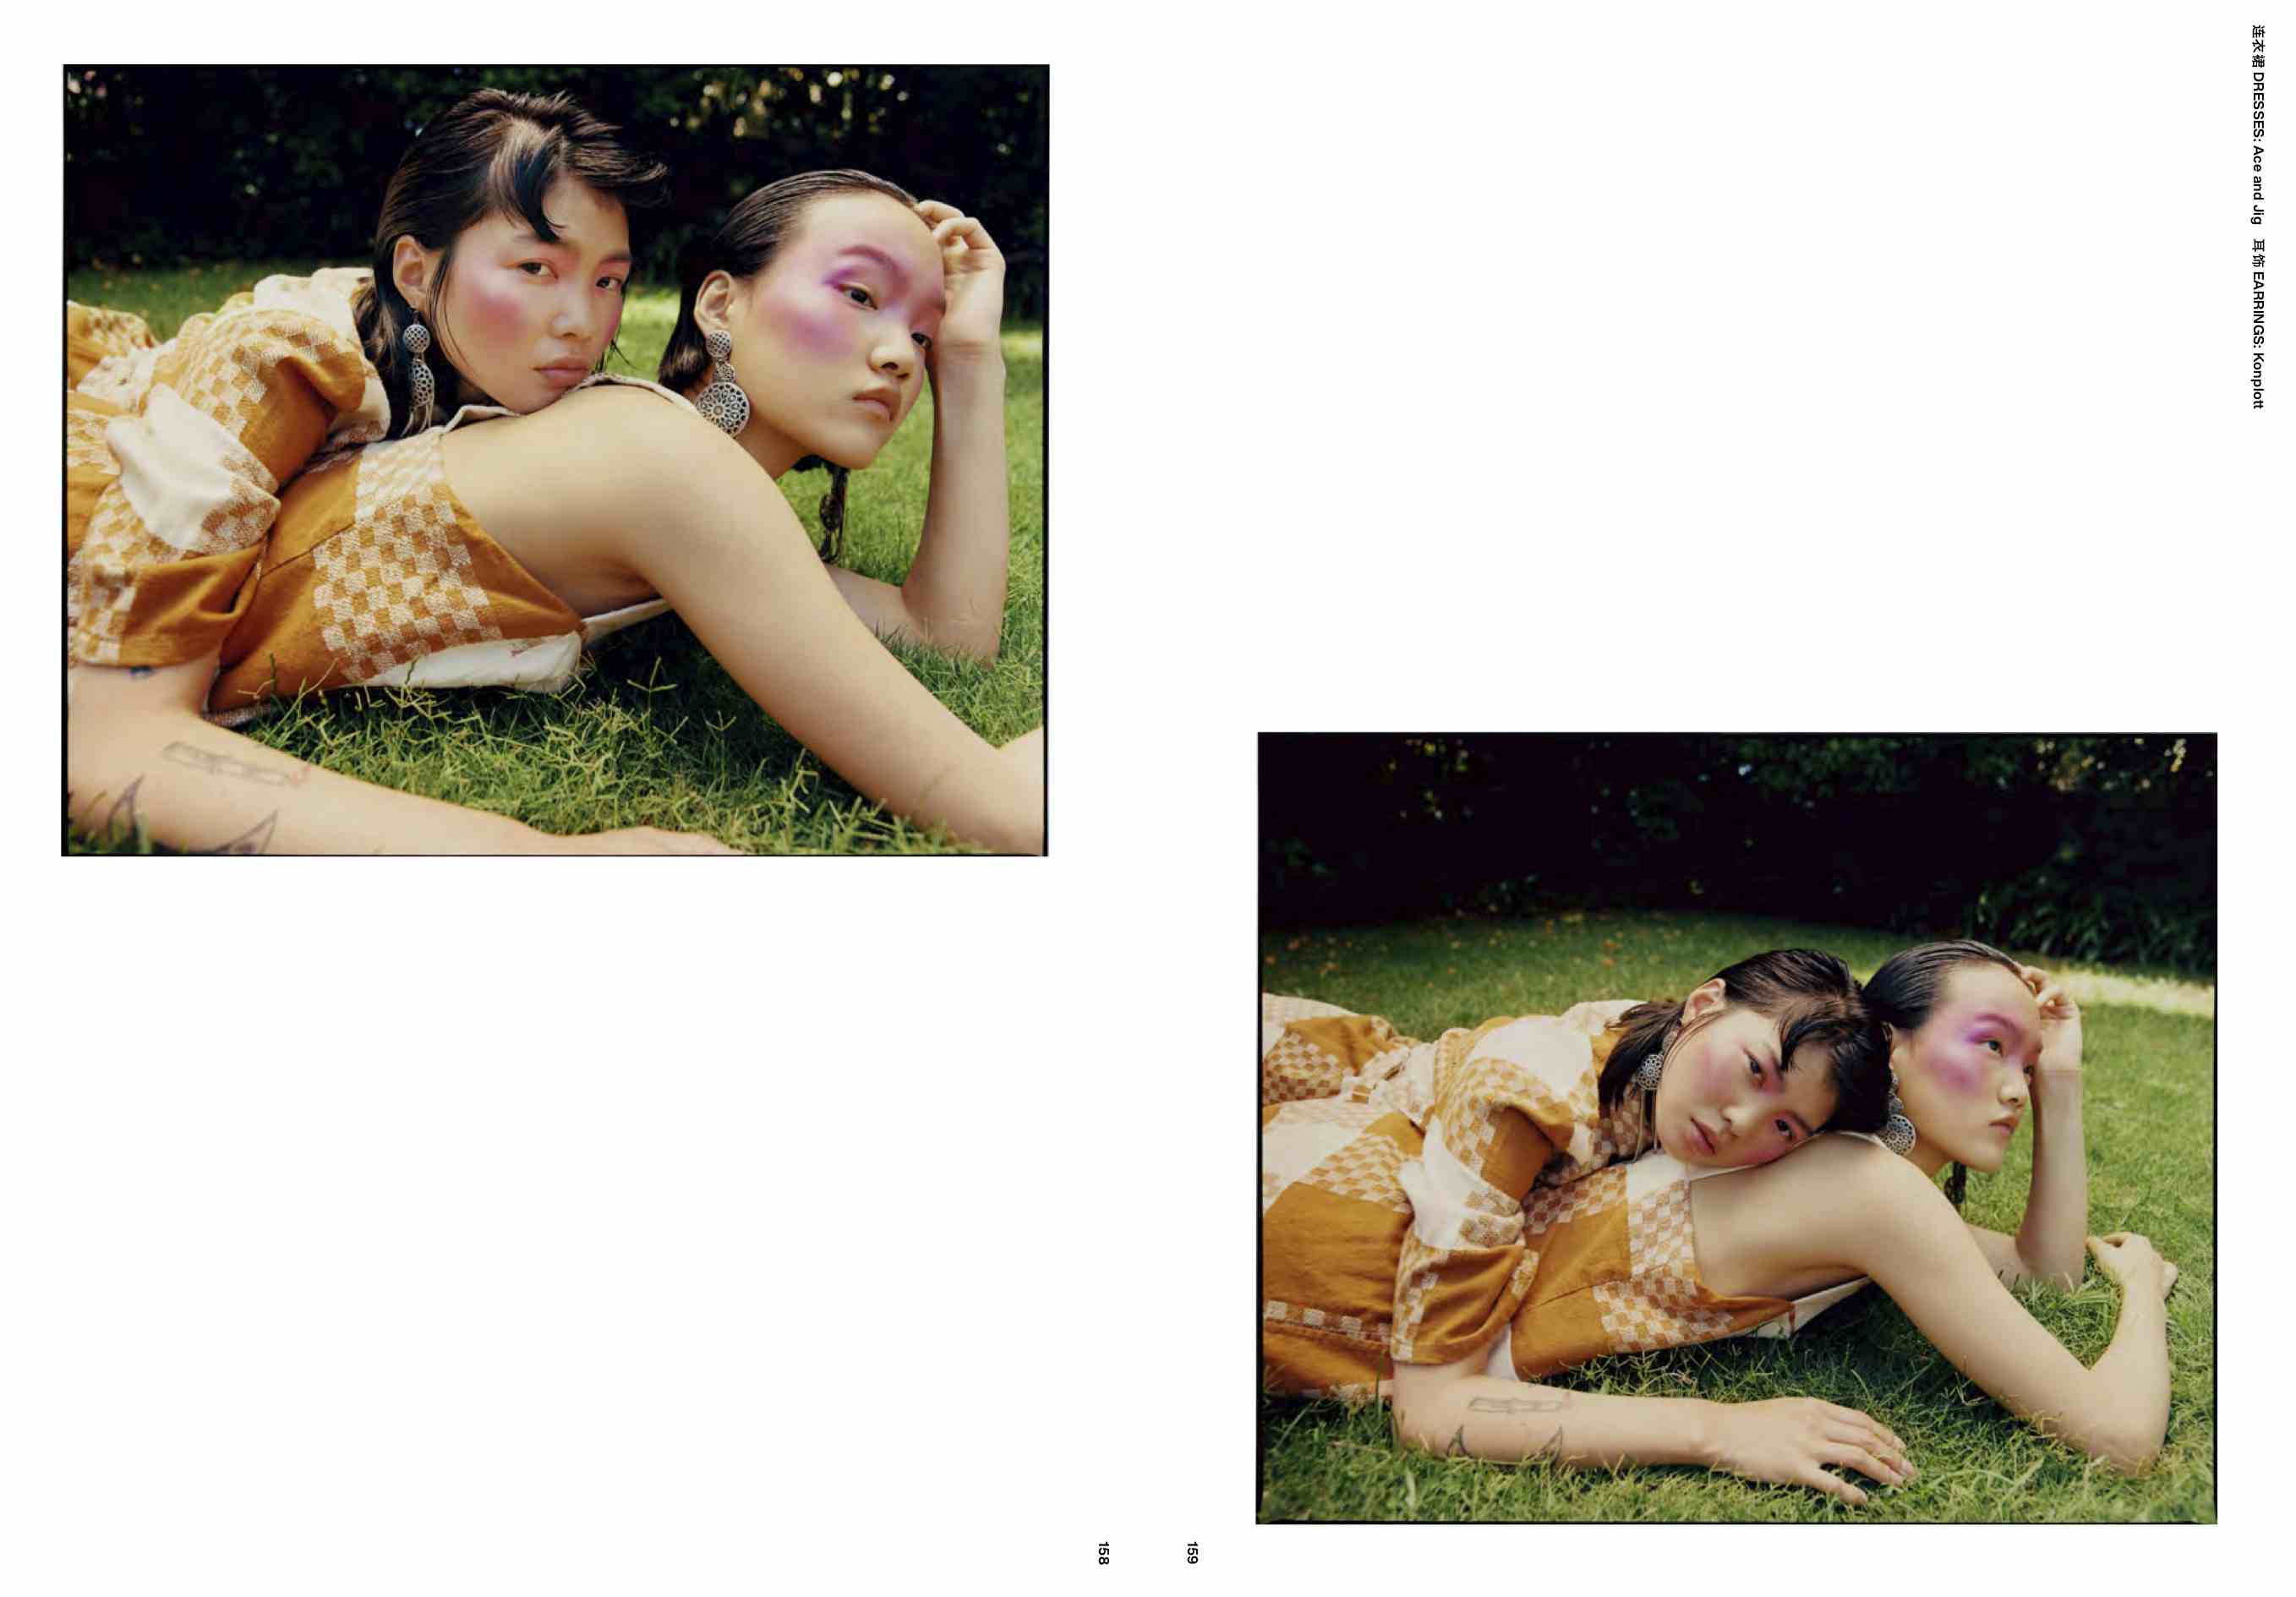 ROUGE - Fashion Book
Photographer: Nadine Ijewere
Model: Manami, Luna Wu, Pan
Stylist: Nathan Klein
Location: Tuscany